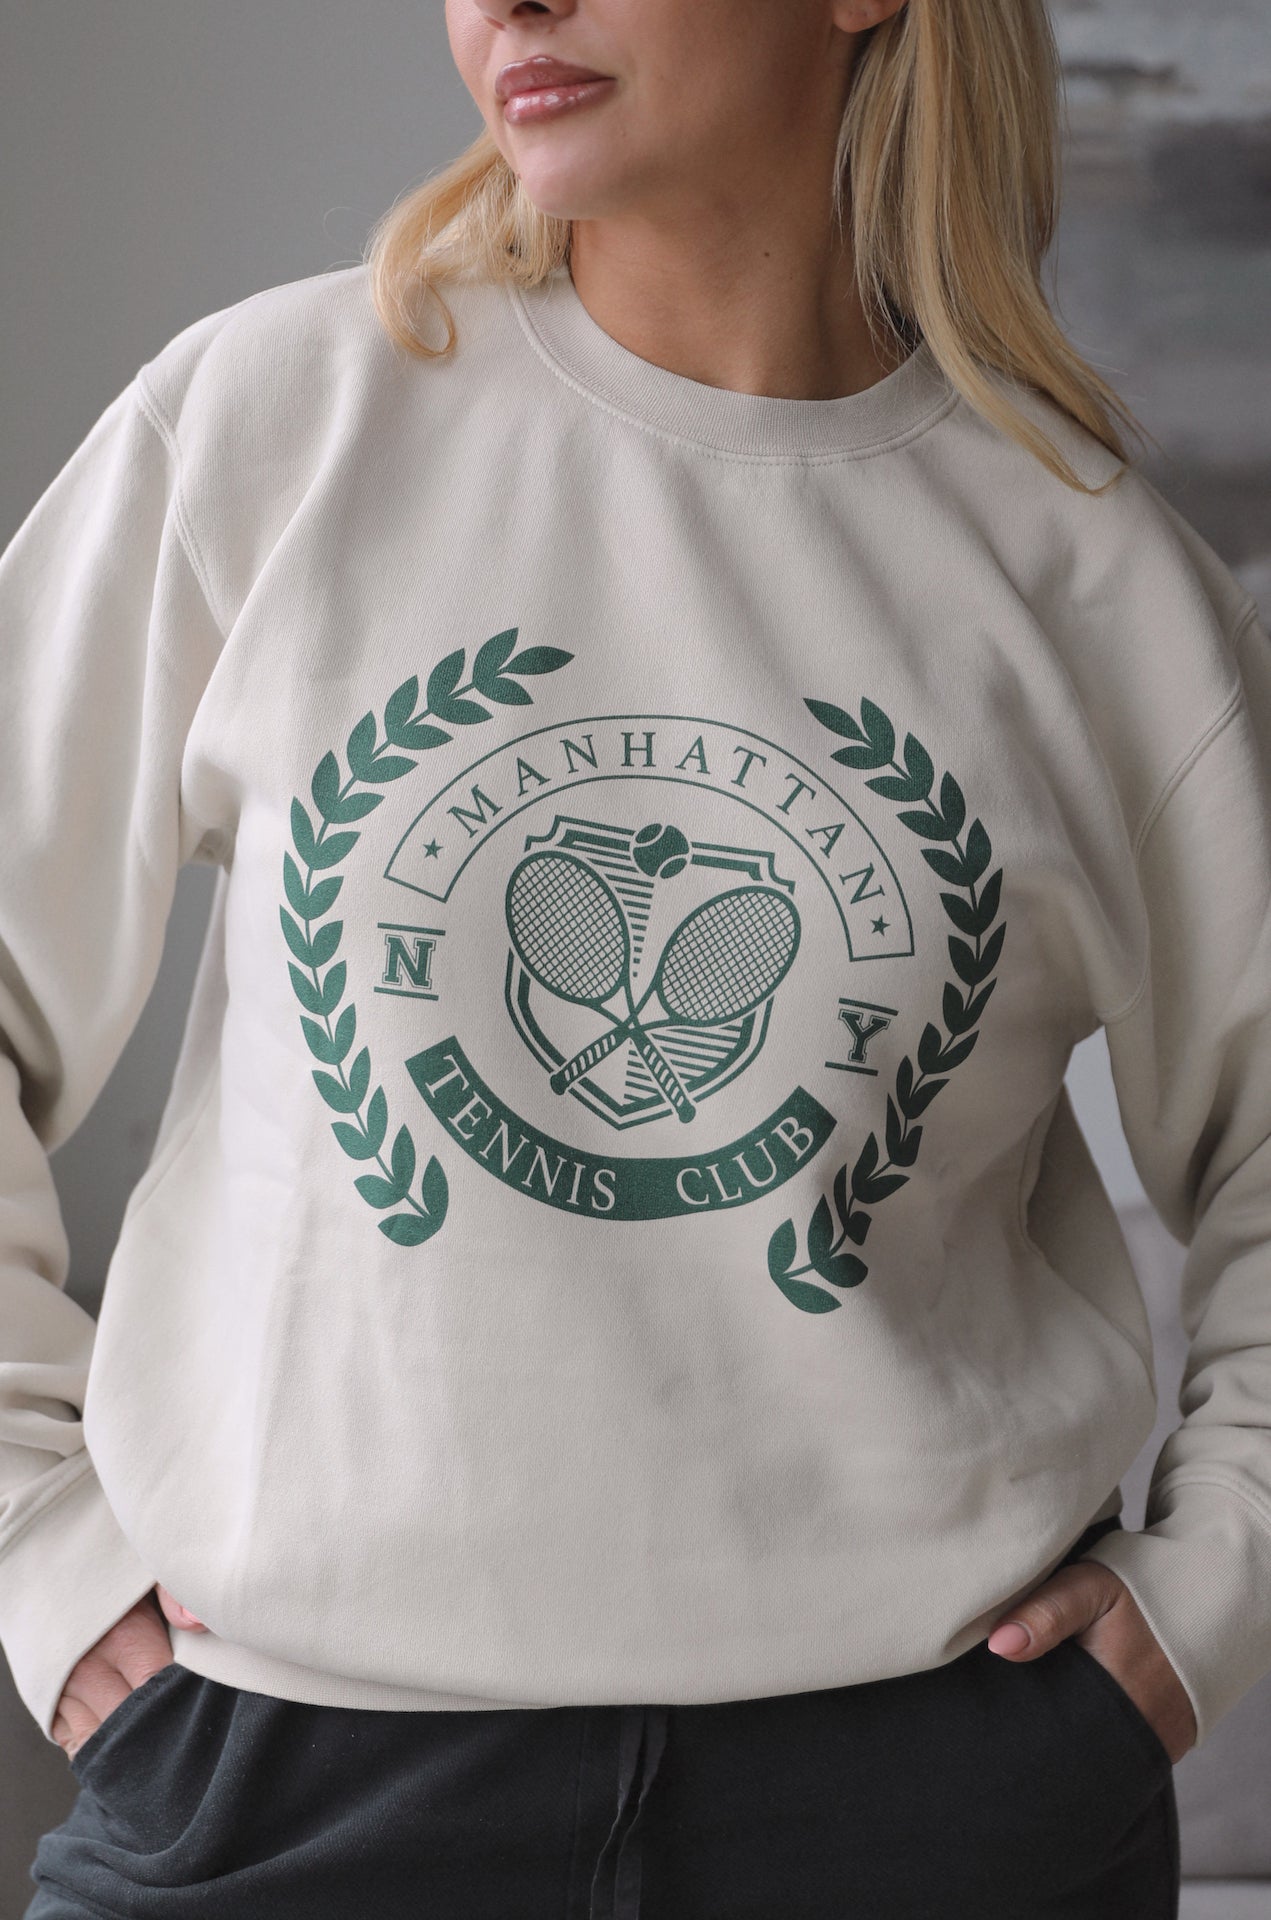 Shop the Preppy Hamptons Tennis Club Sweatshirt